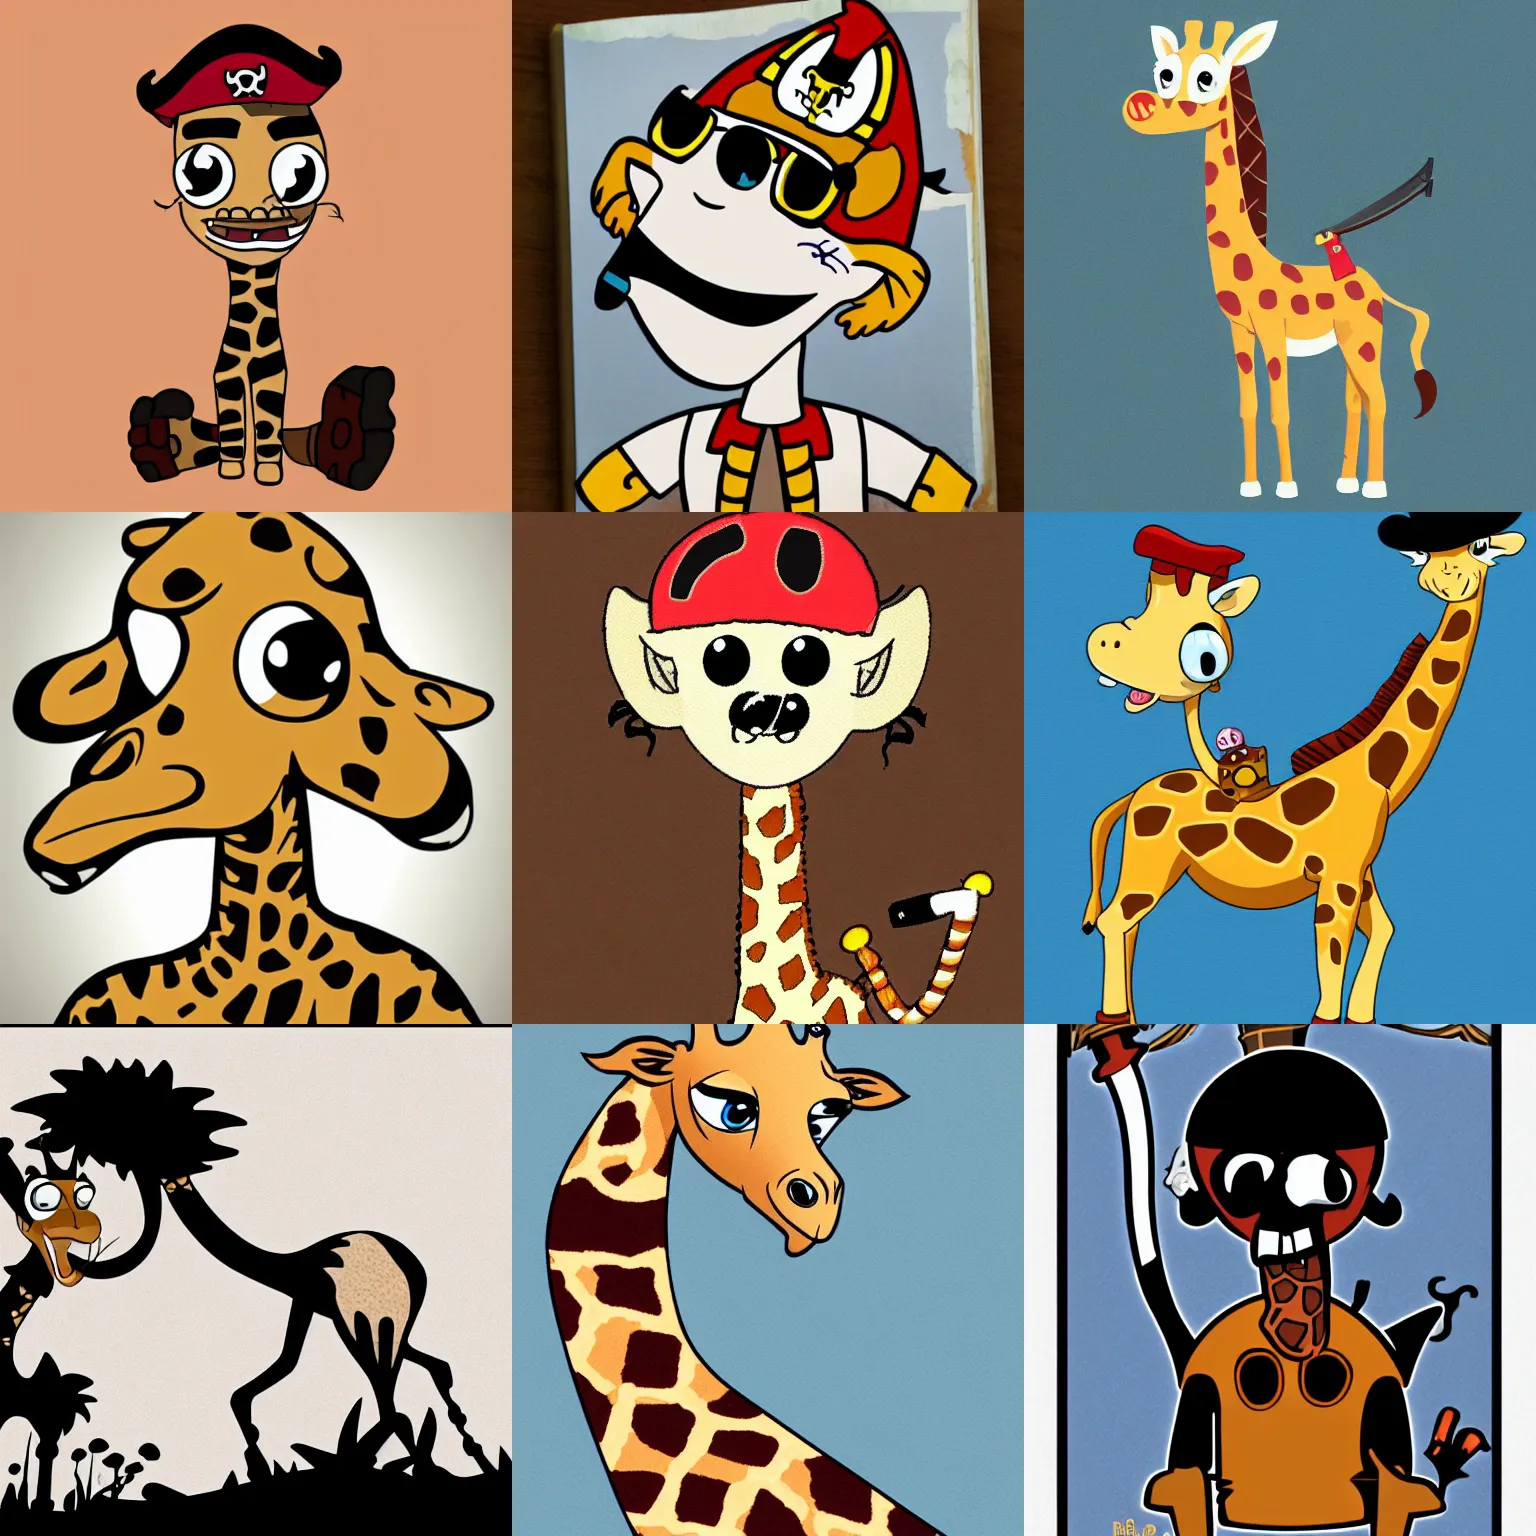 Prompt: giraffe pirate cartoon character